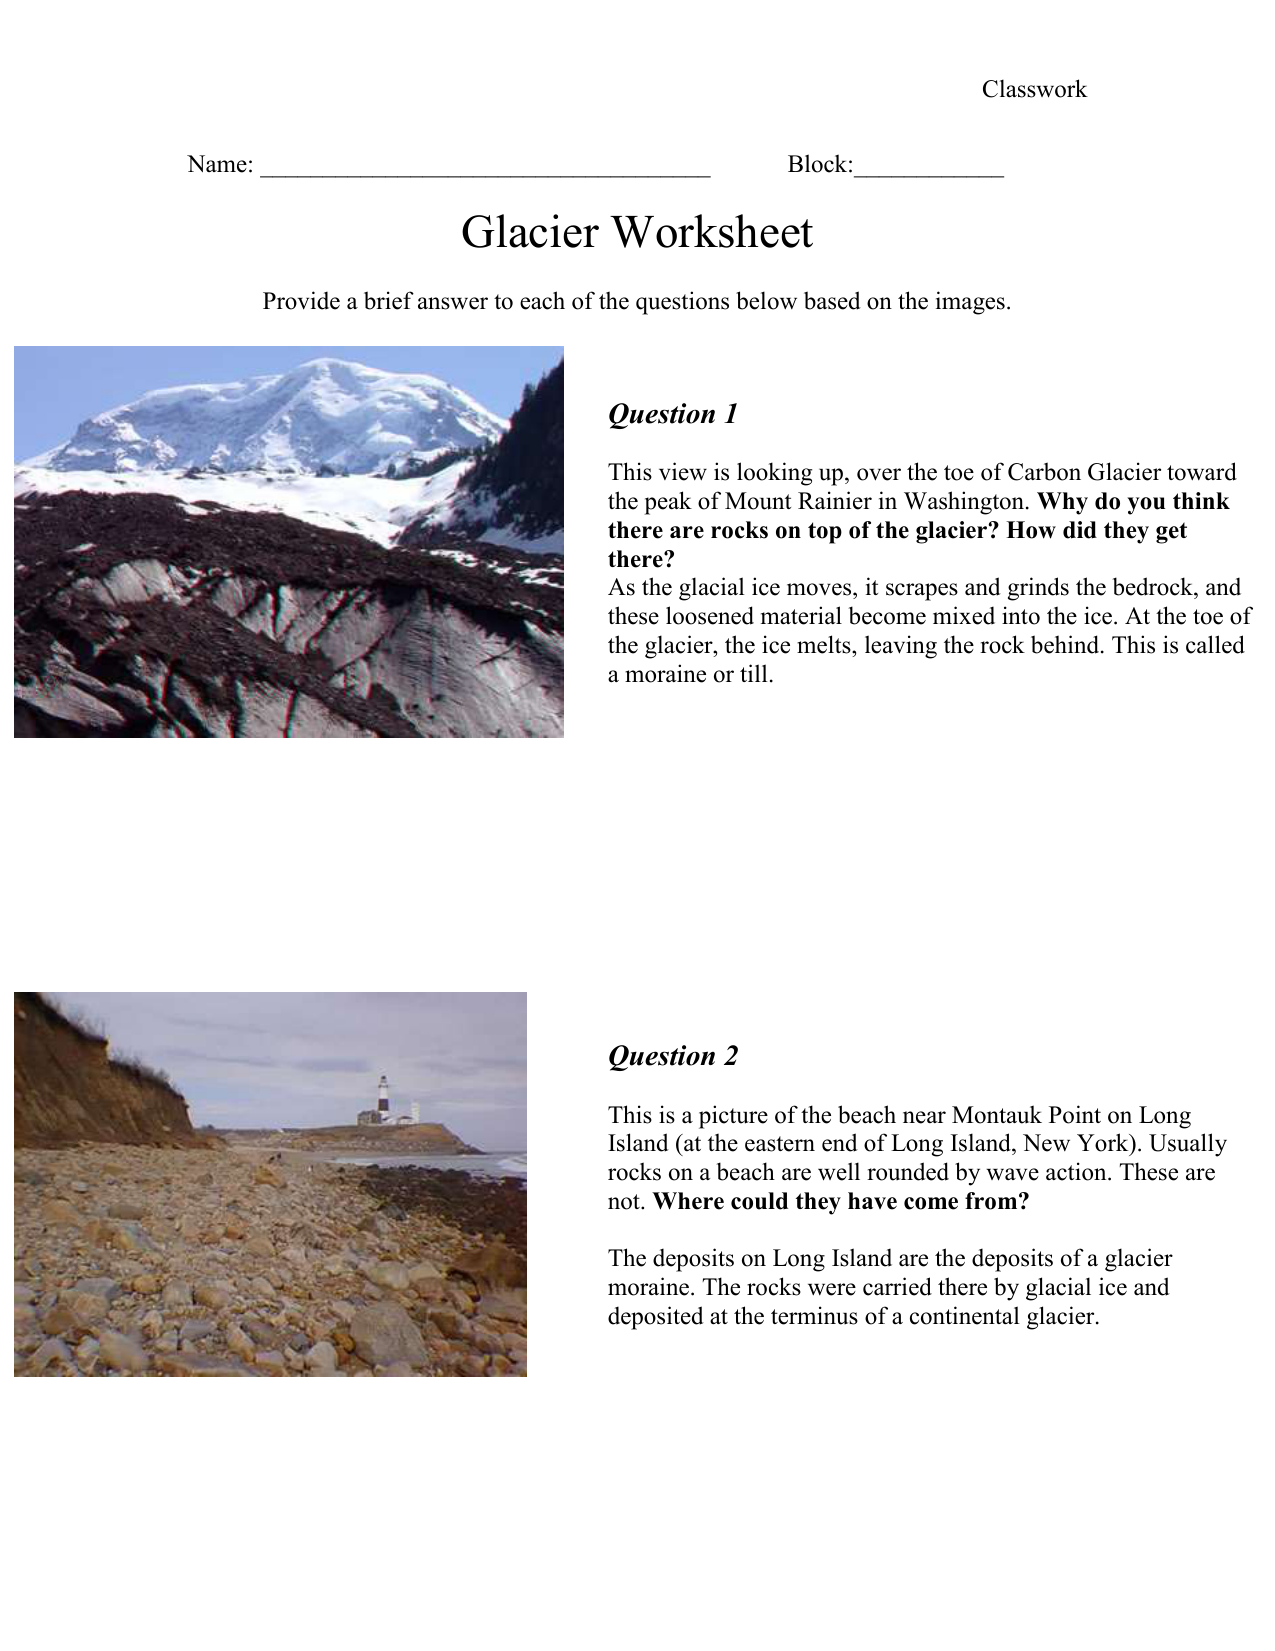 glacier-lesson-worksheet-answers